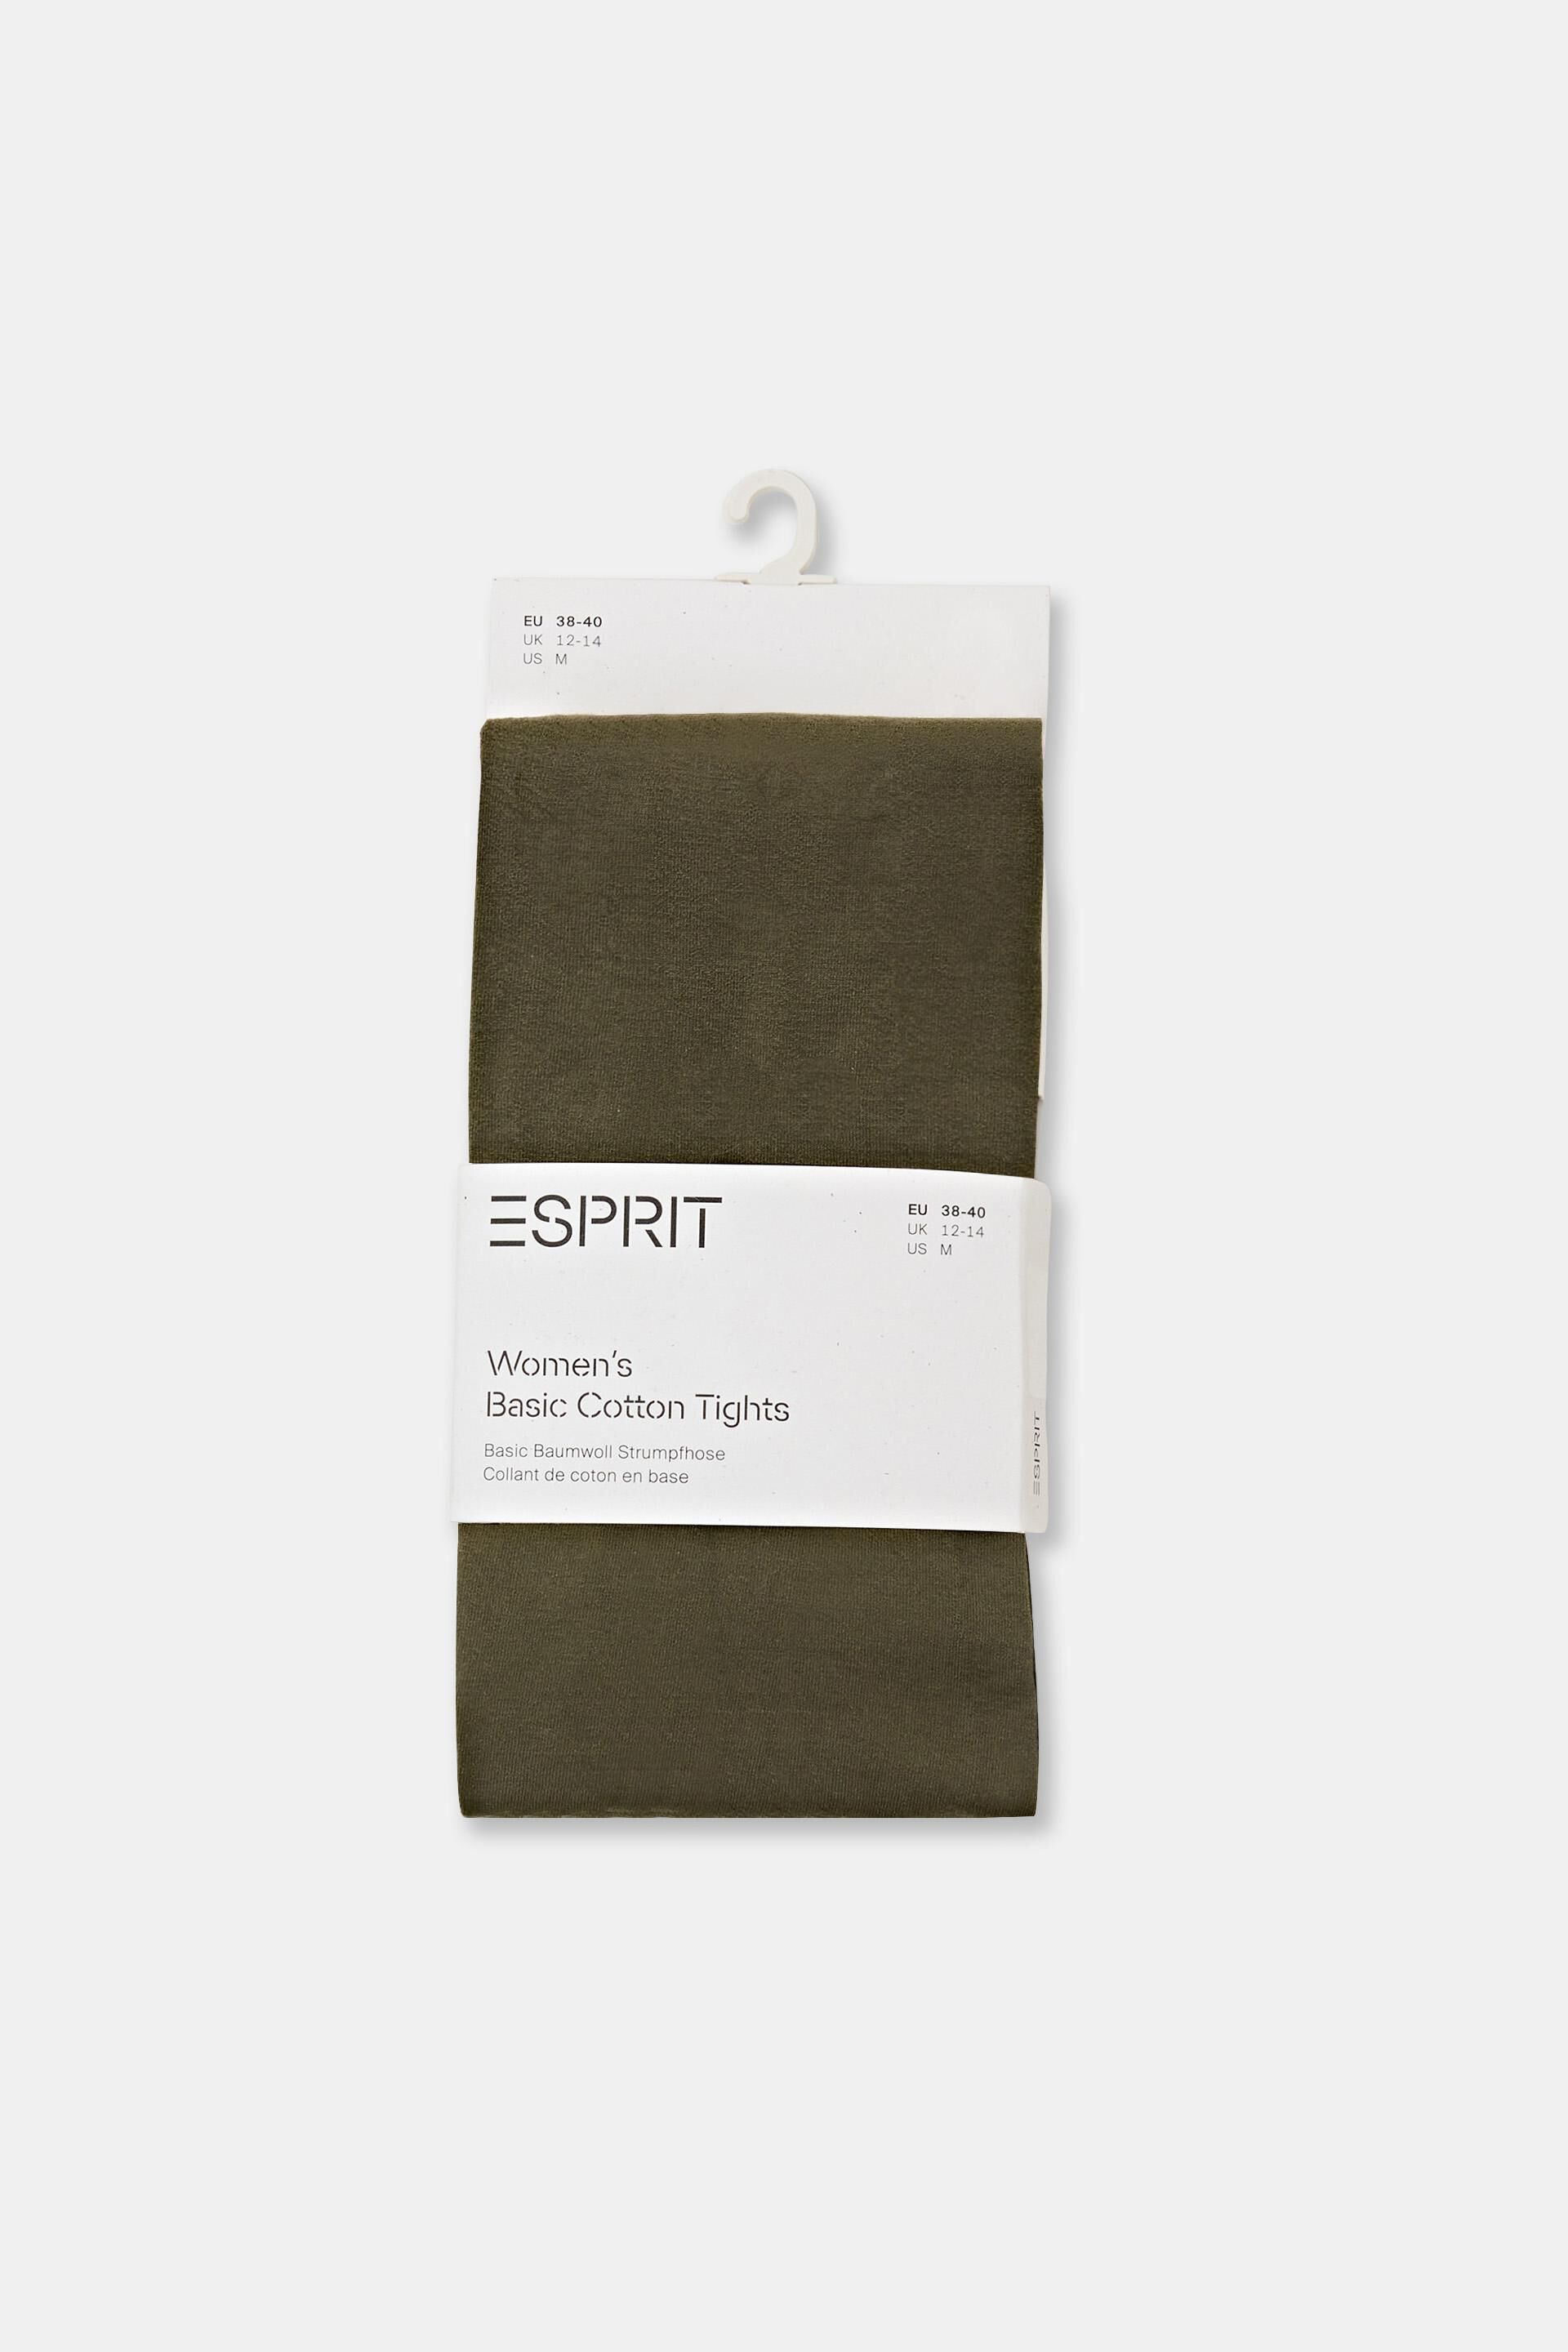 Esprit Opaque tights blend cotton